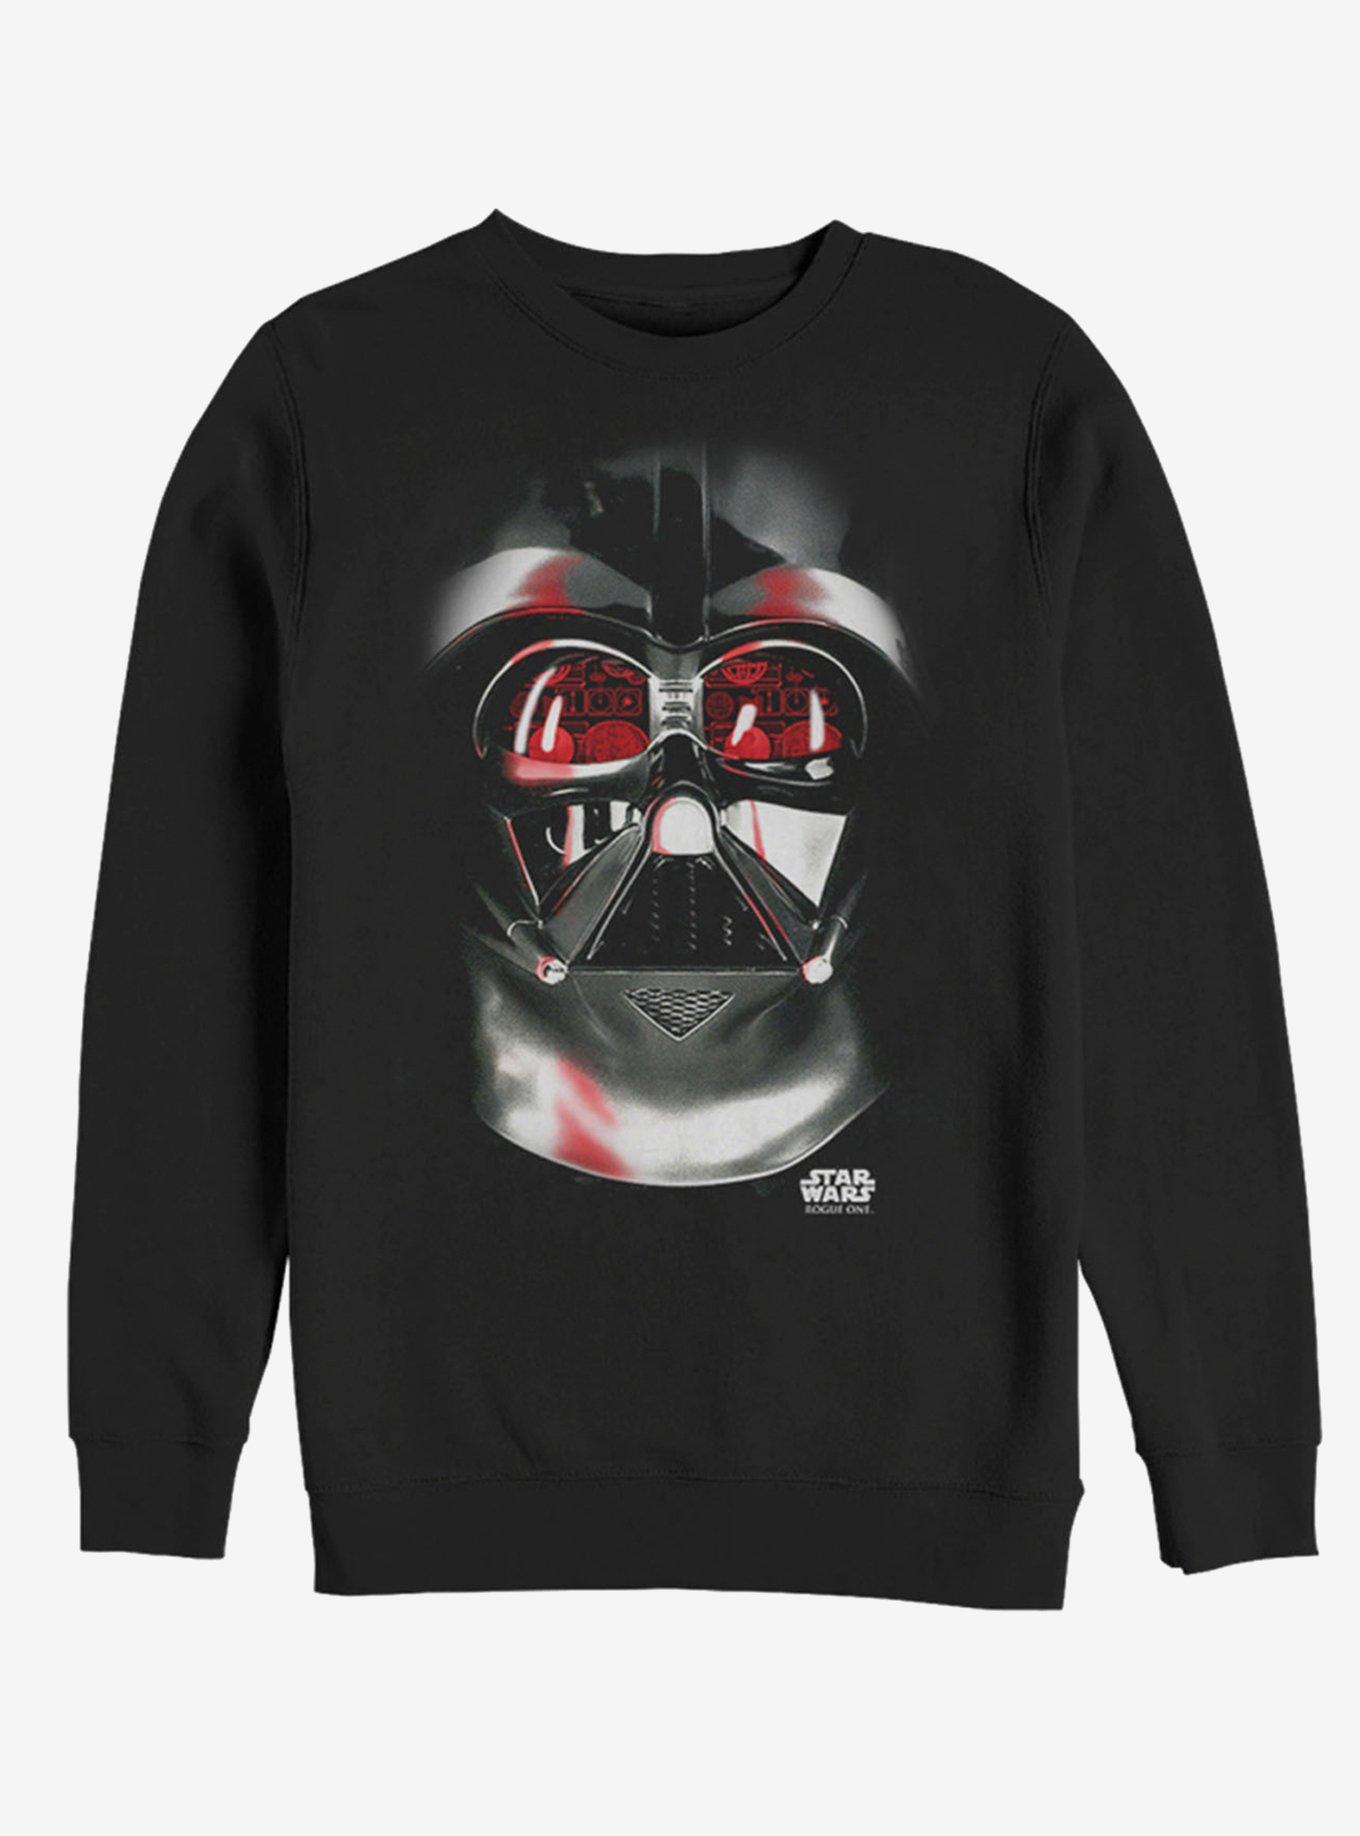 Star Wars Darth Vader Red Eyes Sweatshirt